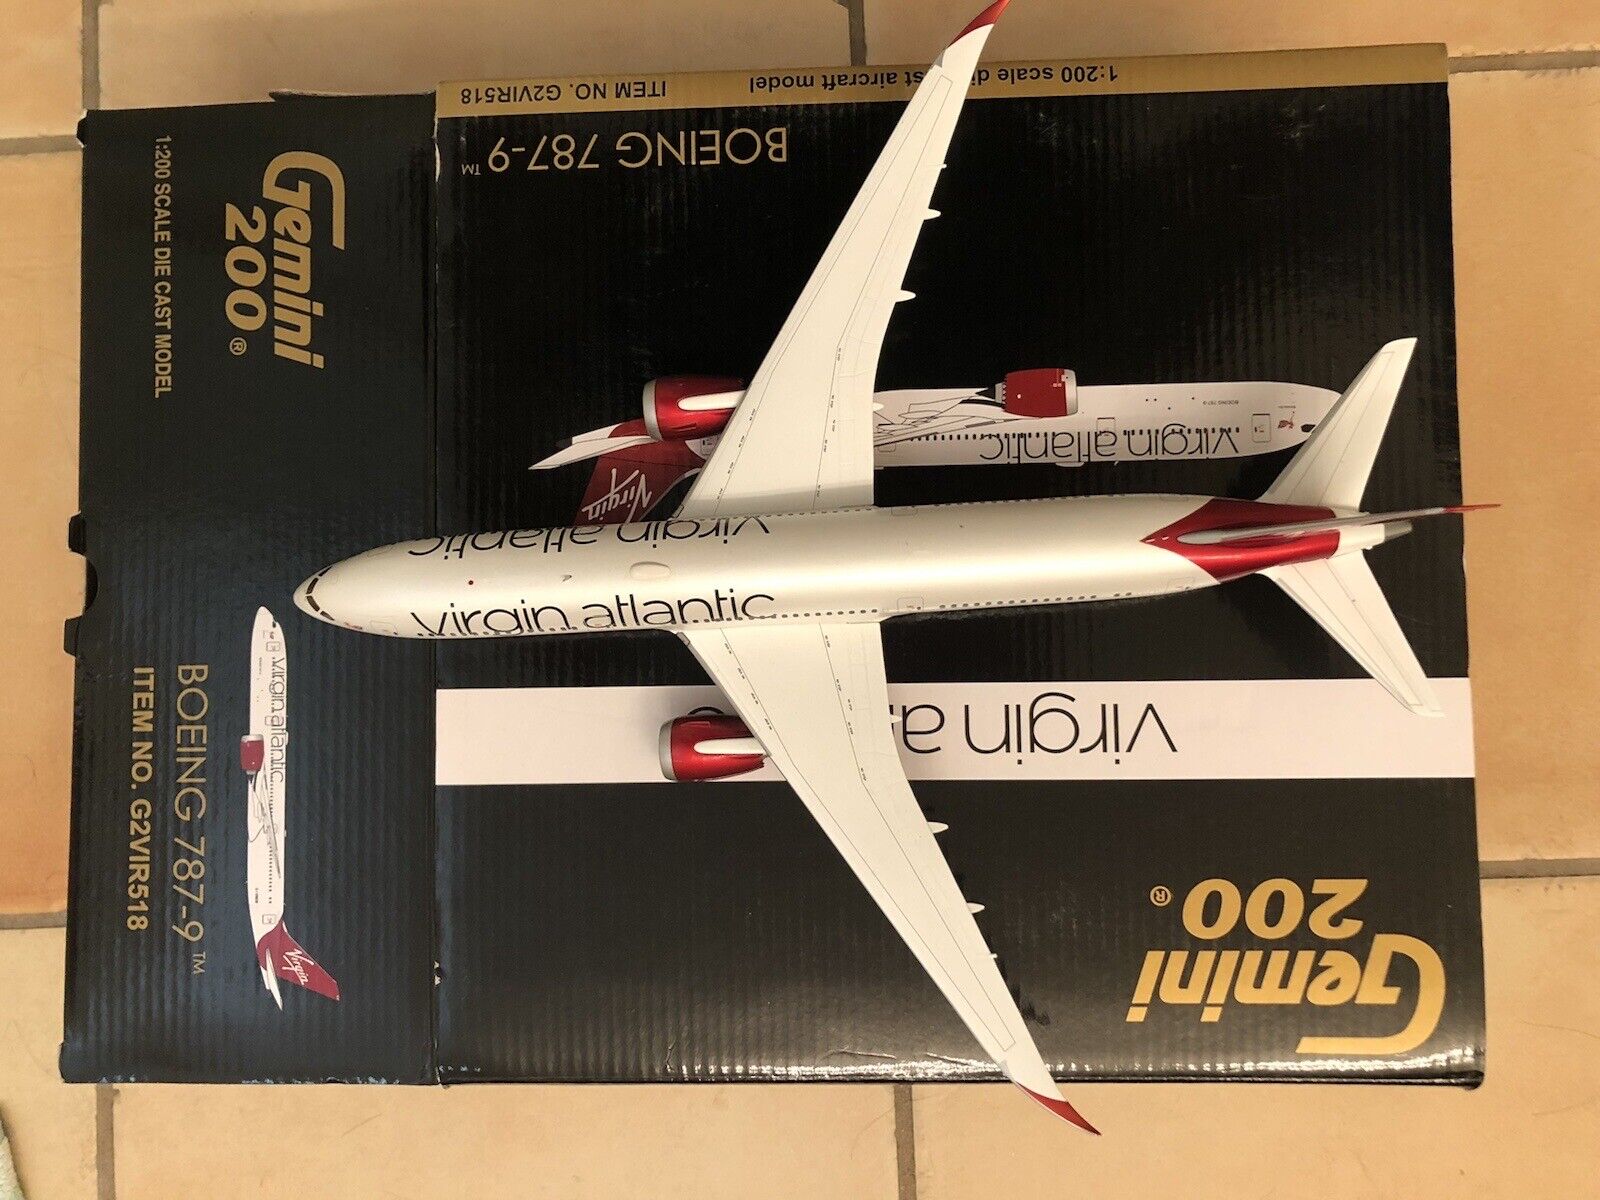 Virgin Atlantic Collectible 1/200 Scale Airplane Collection